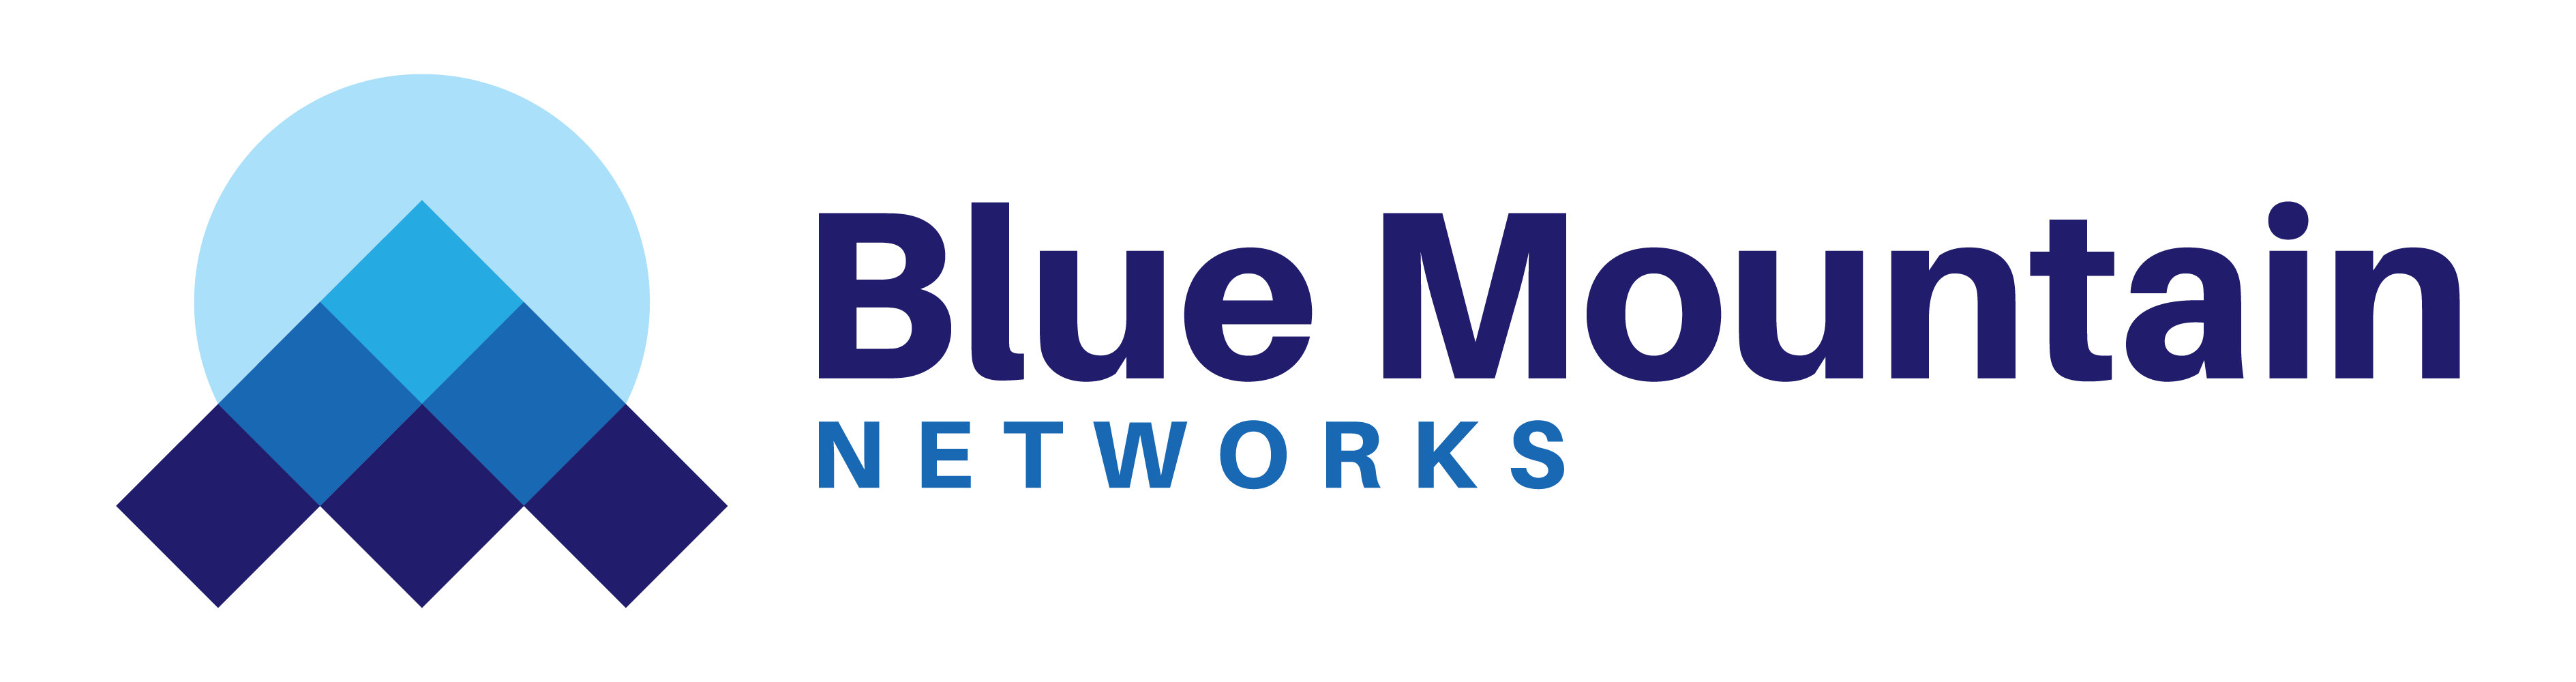 Eastern Oregon Telecom - Blue Mountain Networks